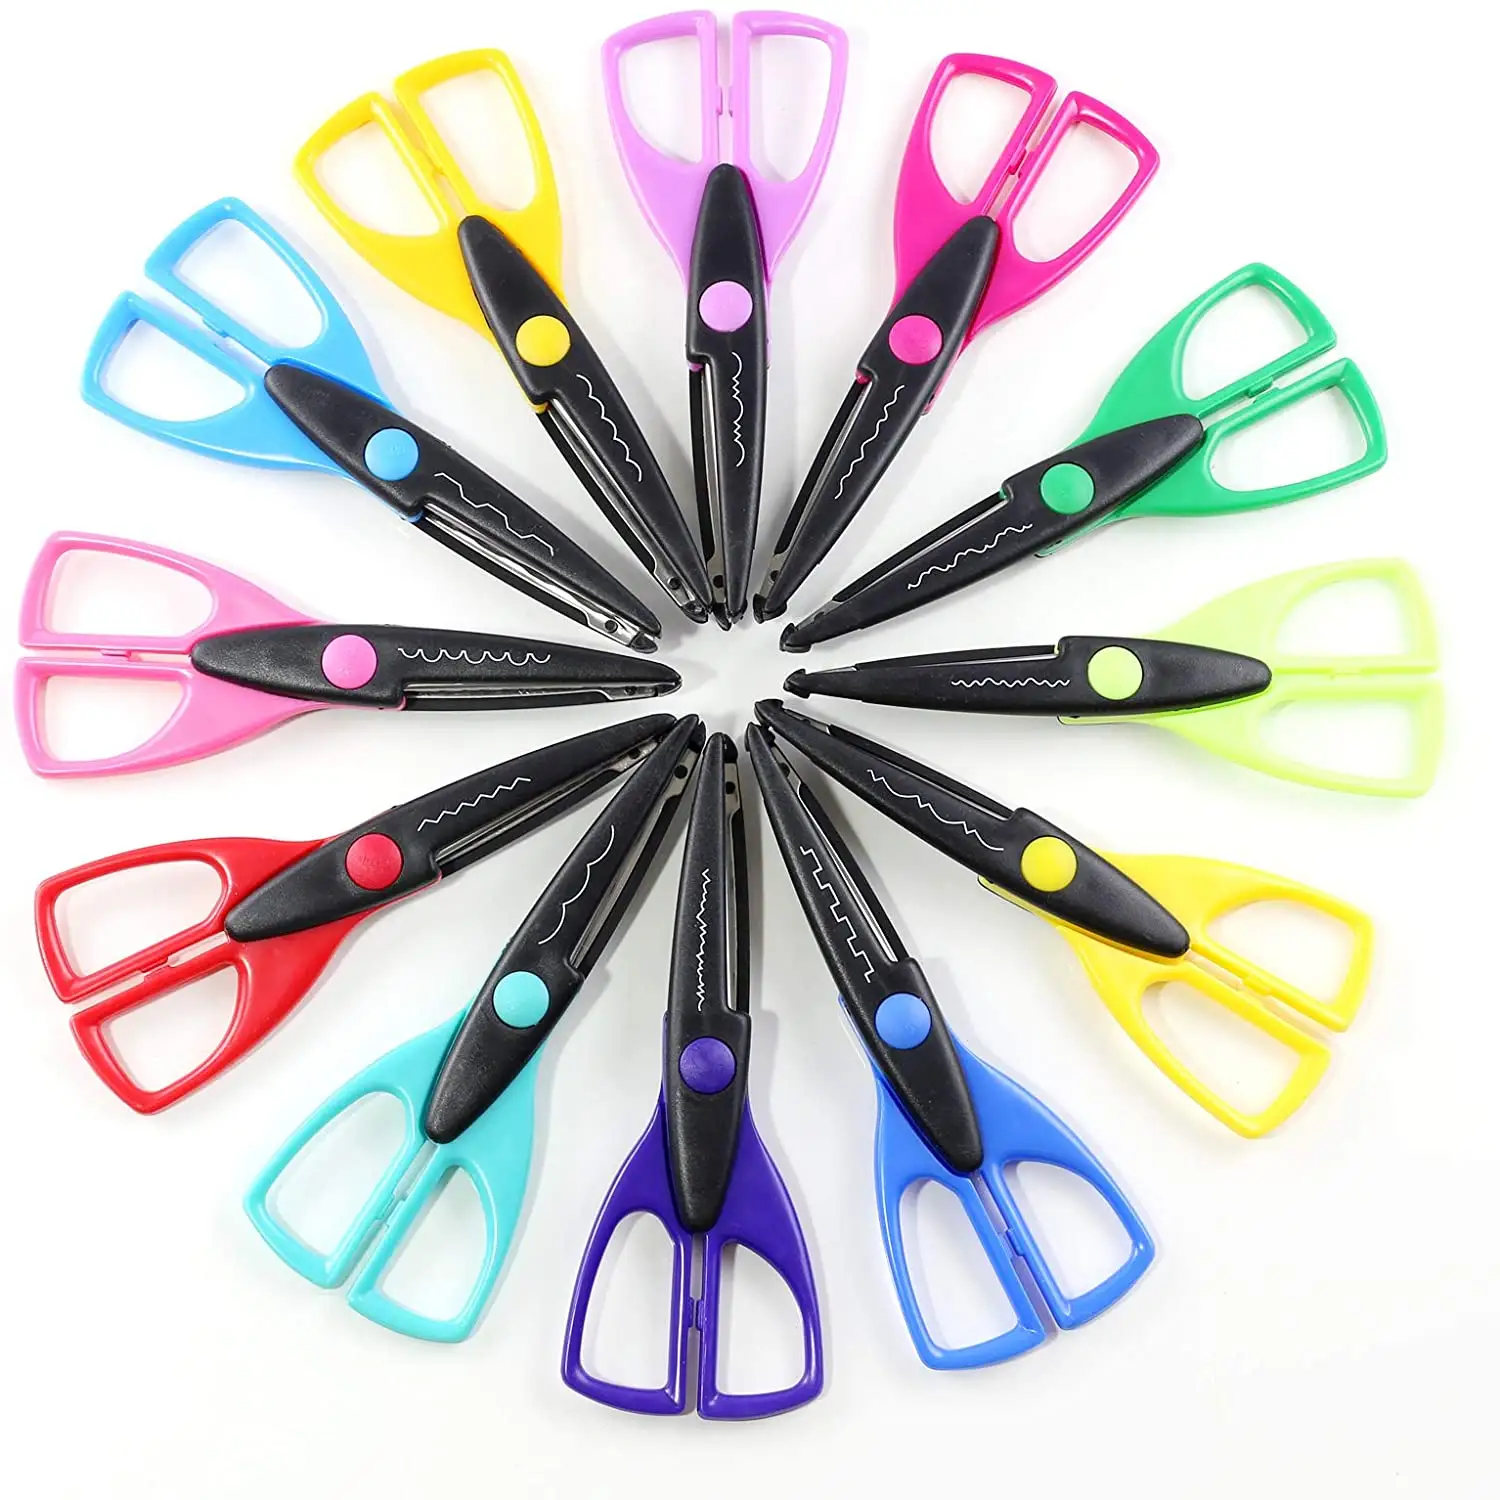 Craft paper EVA scissors stationery scissors for kids DIY puncher